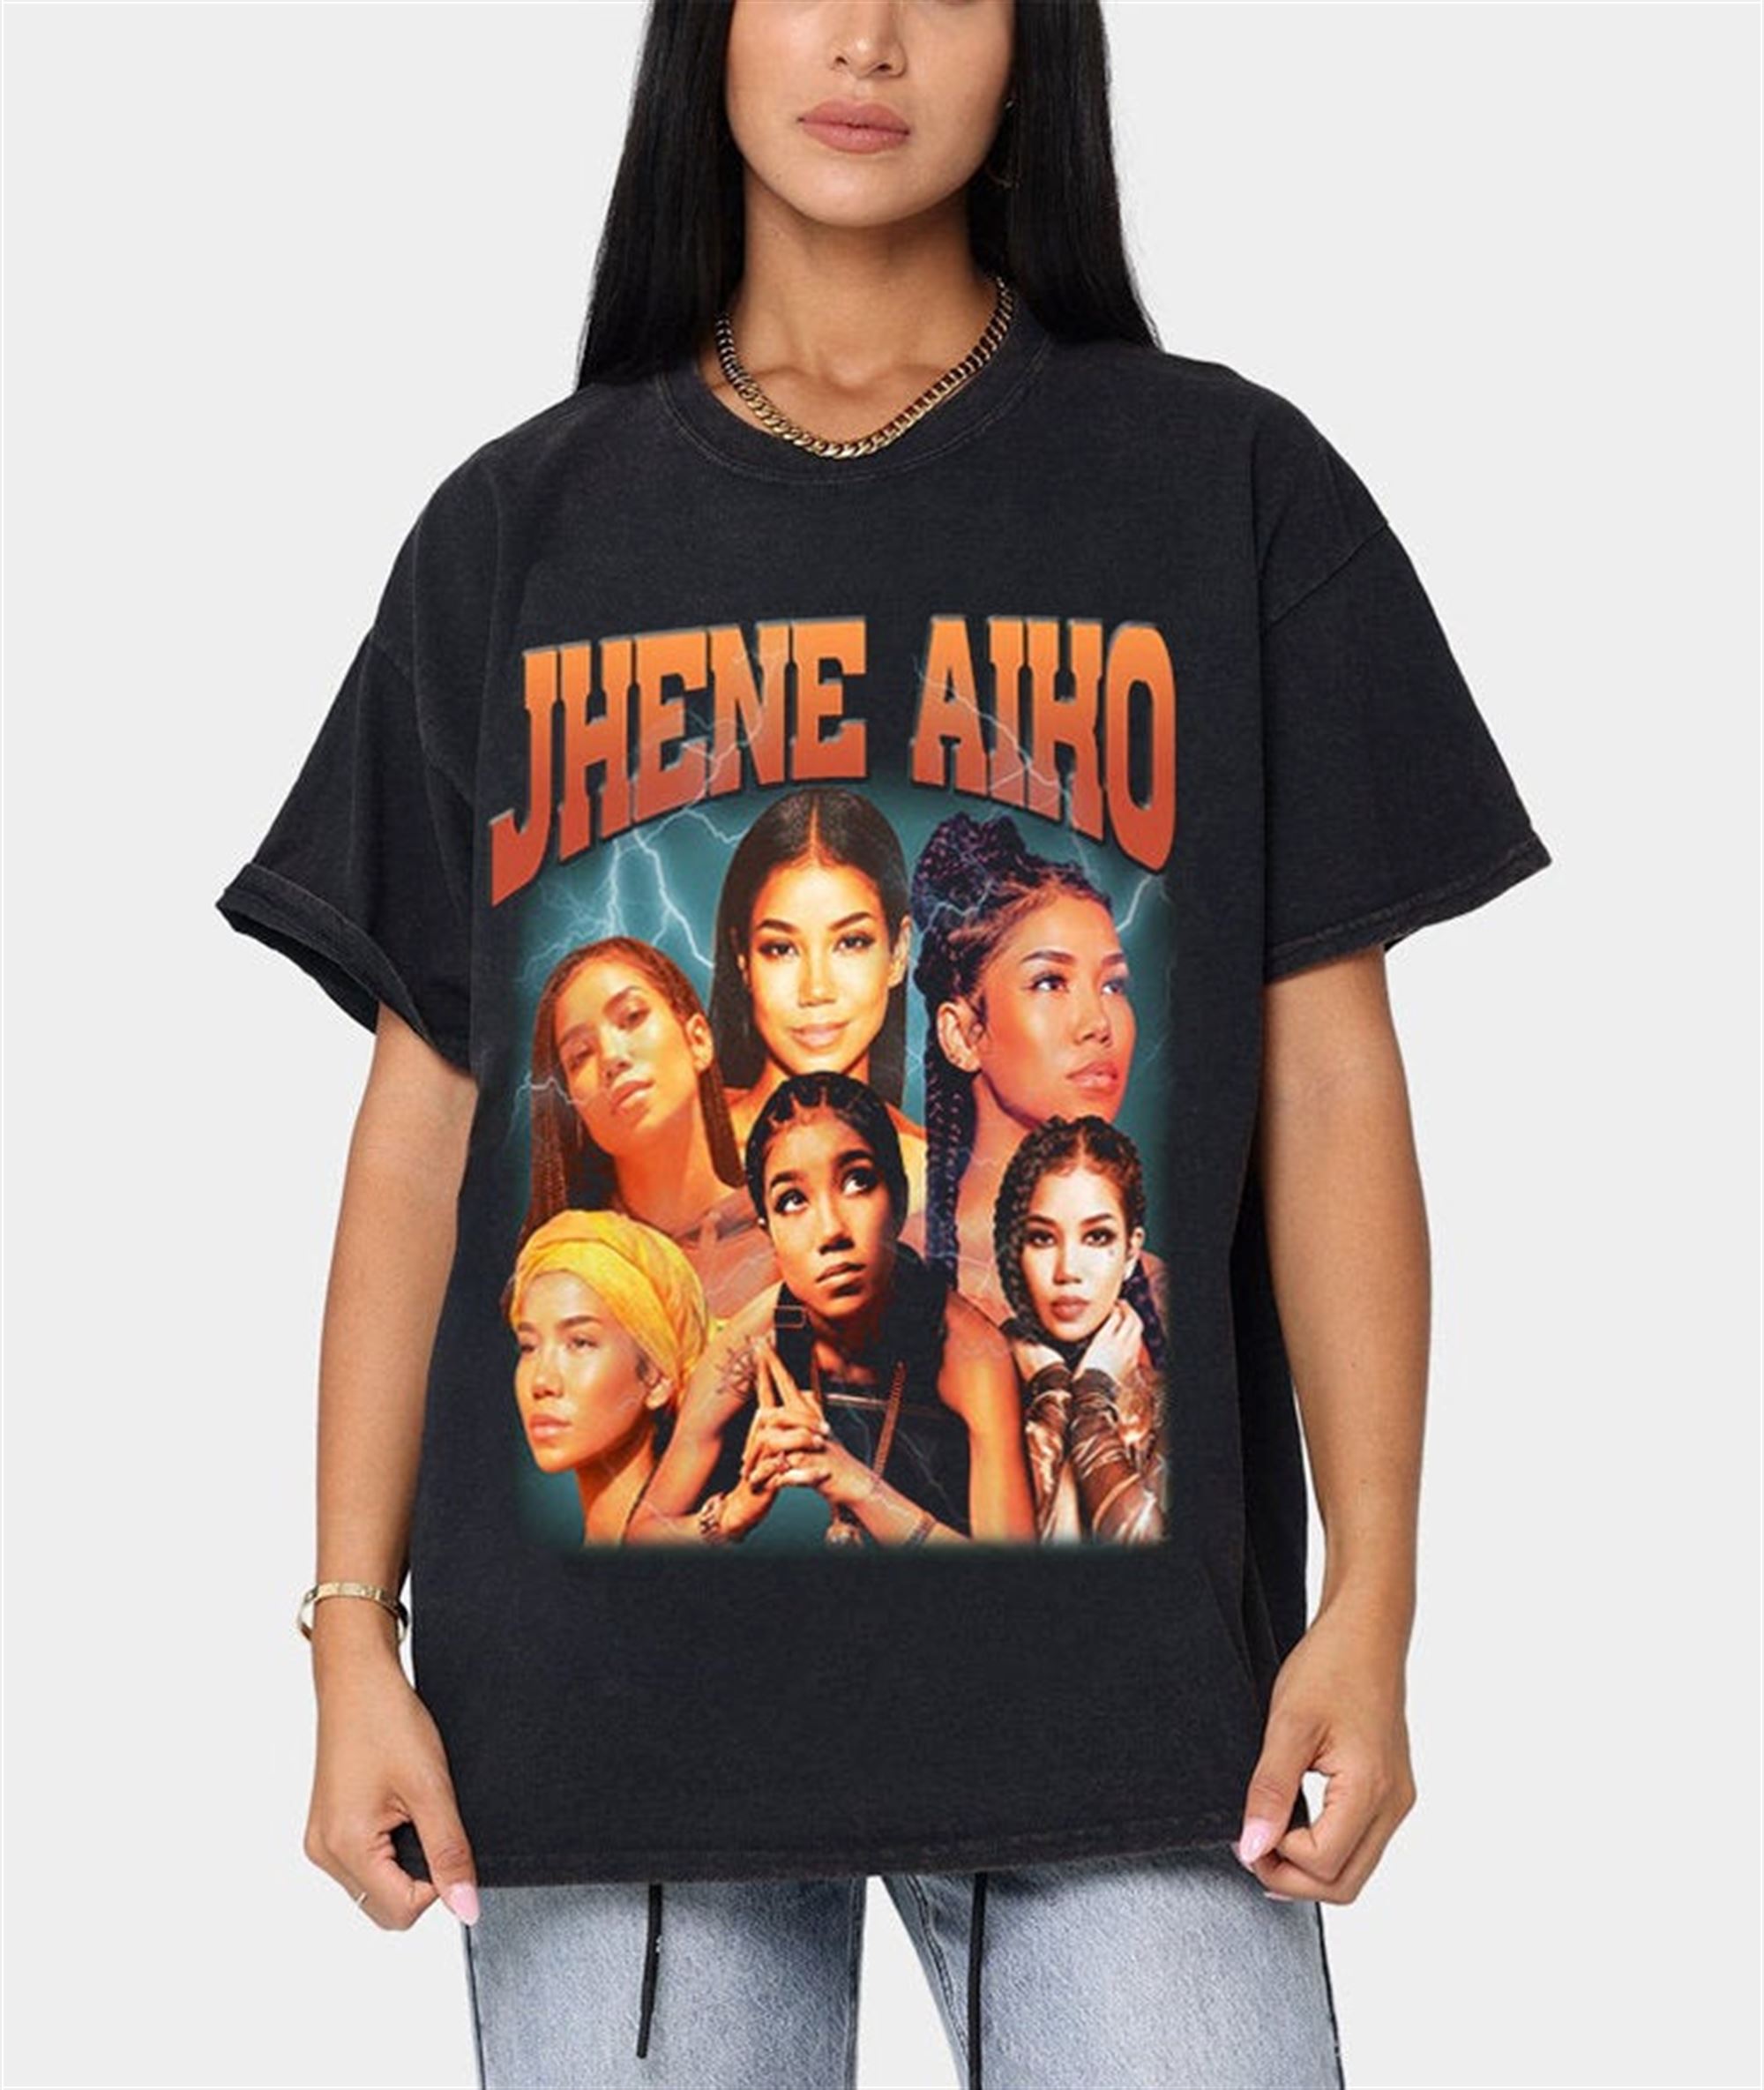 Jhene Aiko Shirt Vintage 90s Unisex T-shirt Unisex Graphic Tee Rapper Vintage Tee Retro Queen Of Rnb Jhene Aiko Chilombo H-m19-7